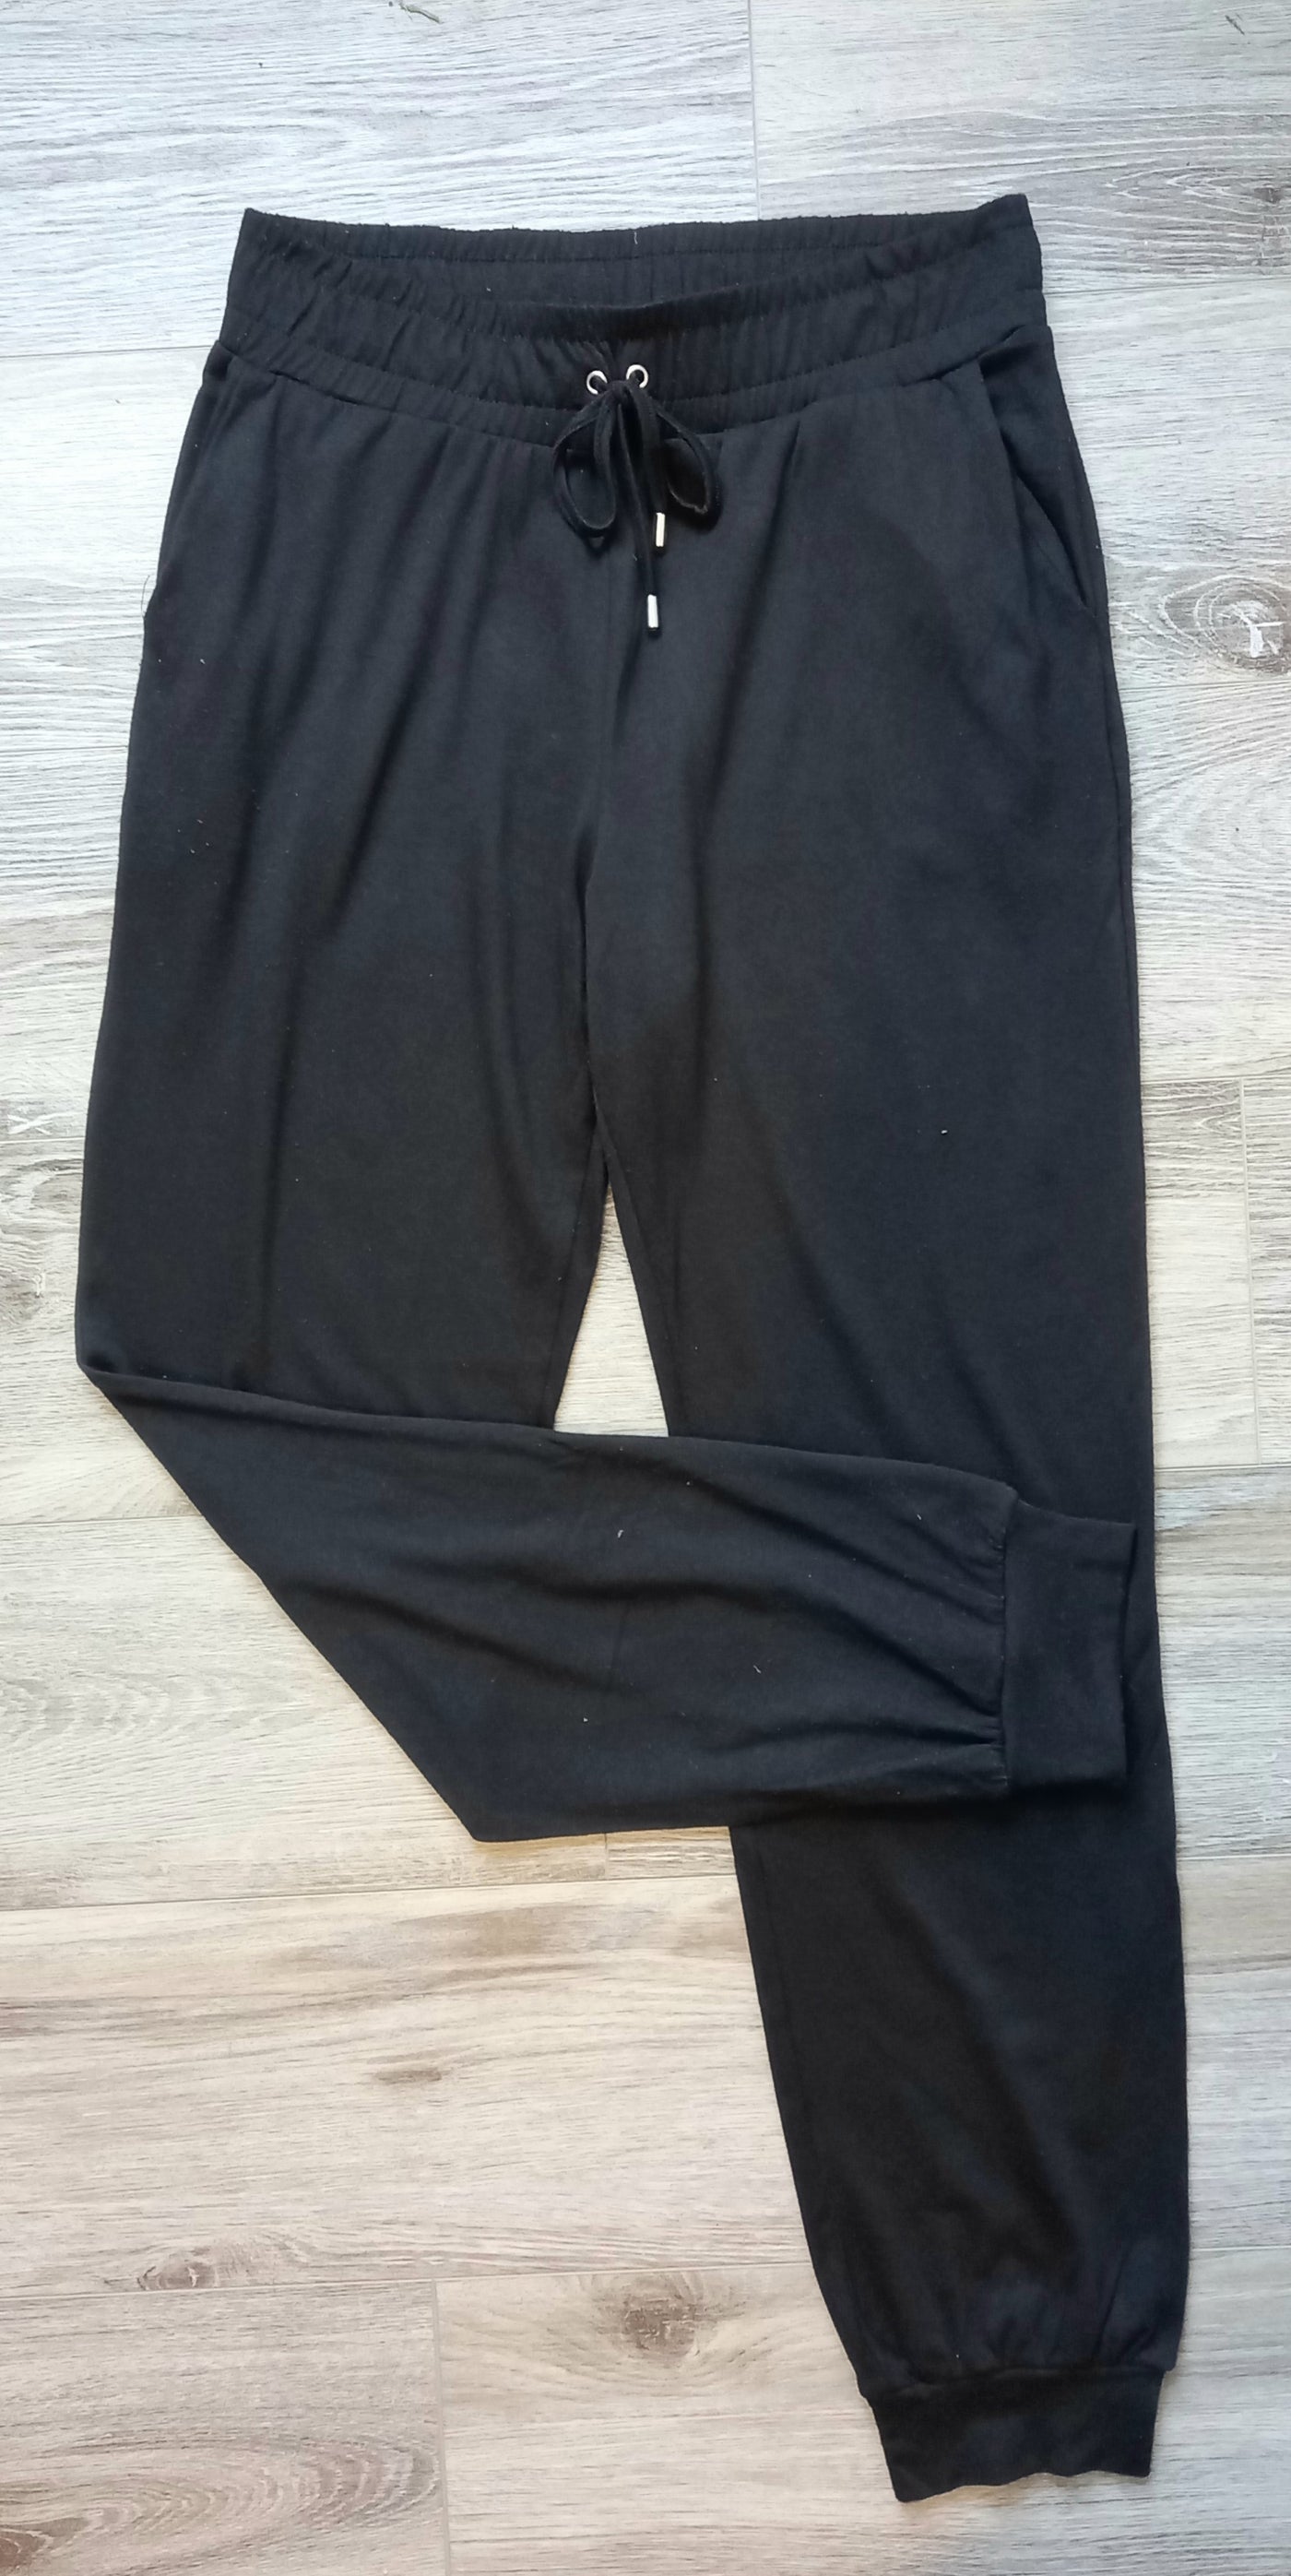 Primark Black Jogging Bottoms - Size XS (Approx UK 8)